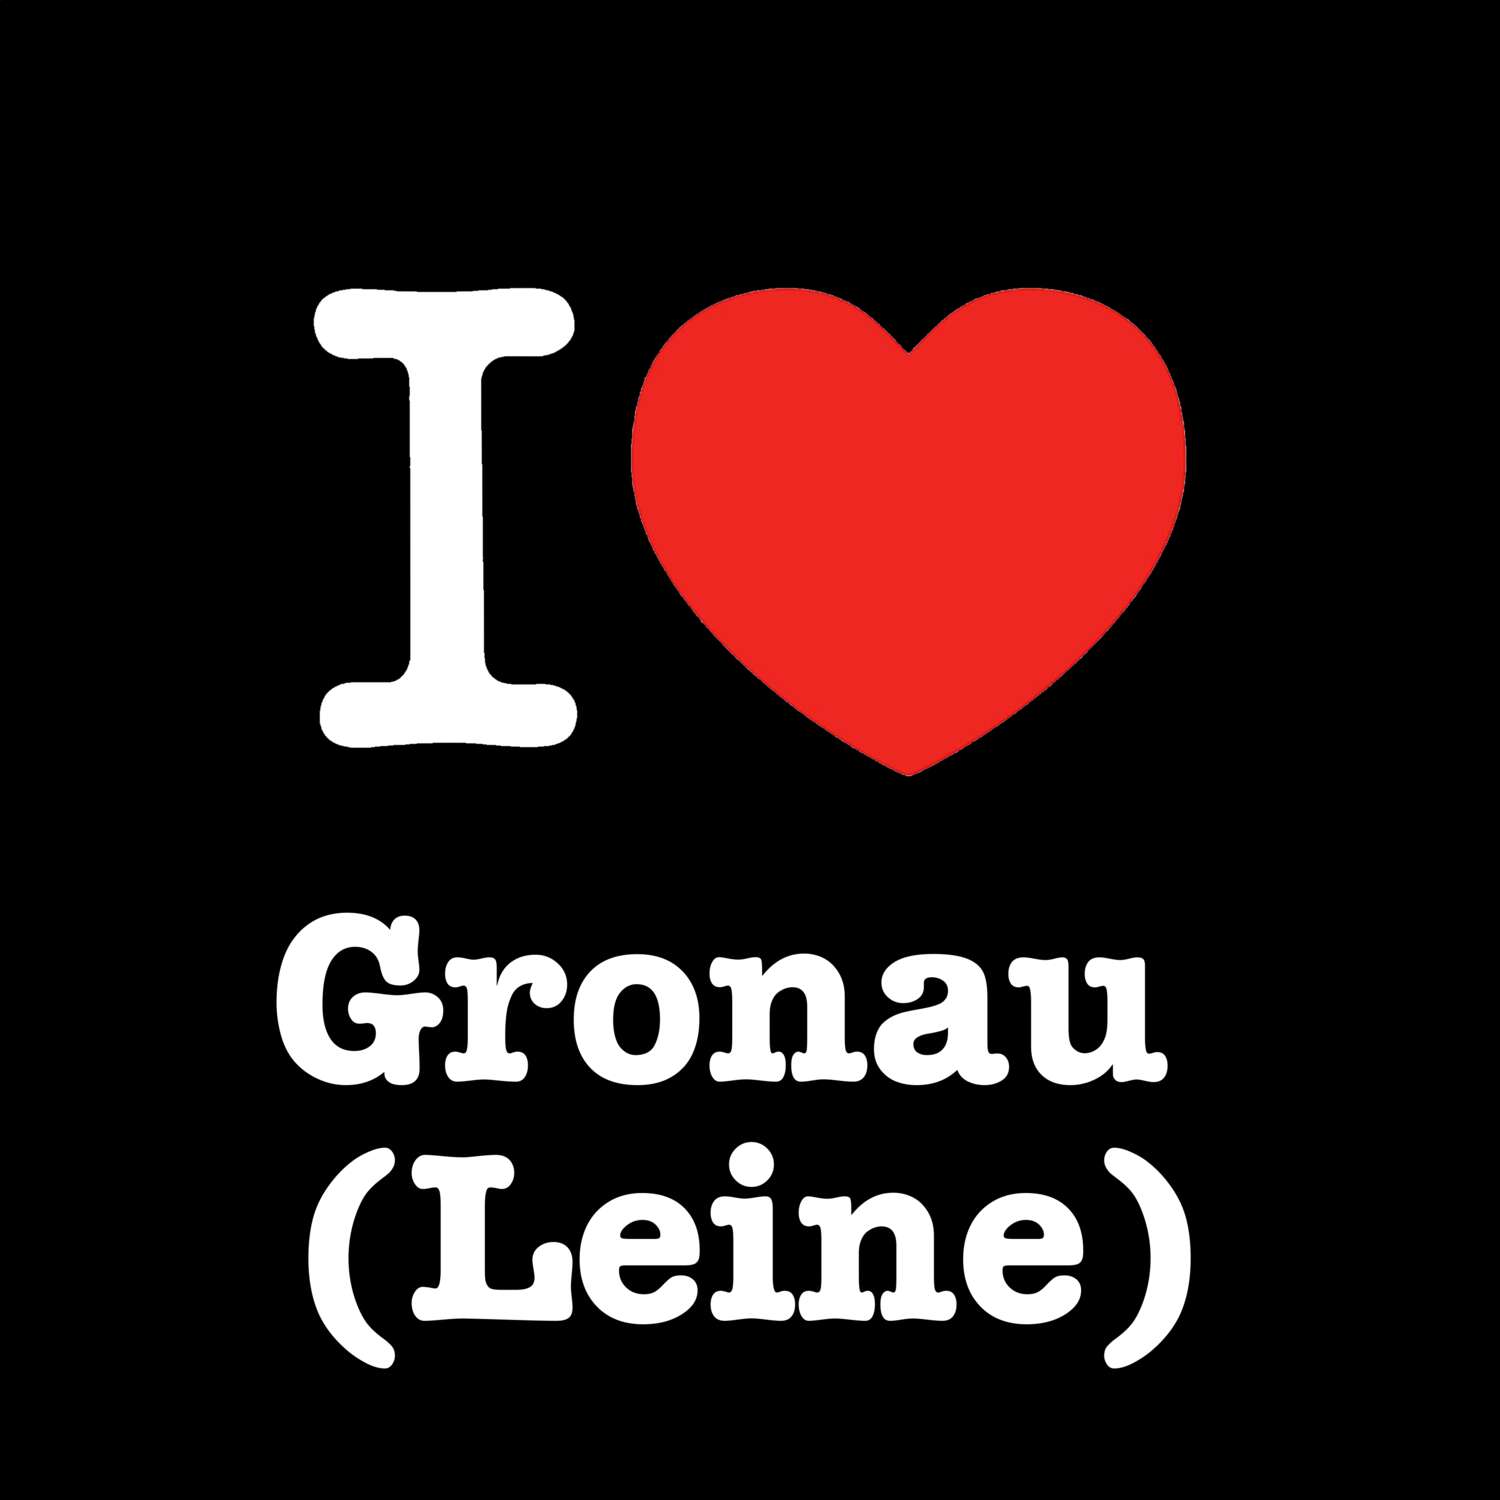 Gronau (Leine) T-Shirt »I love«